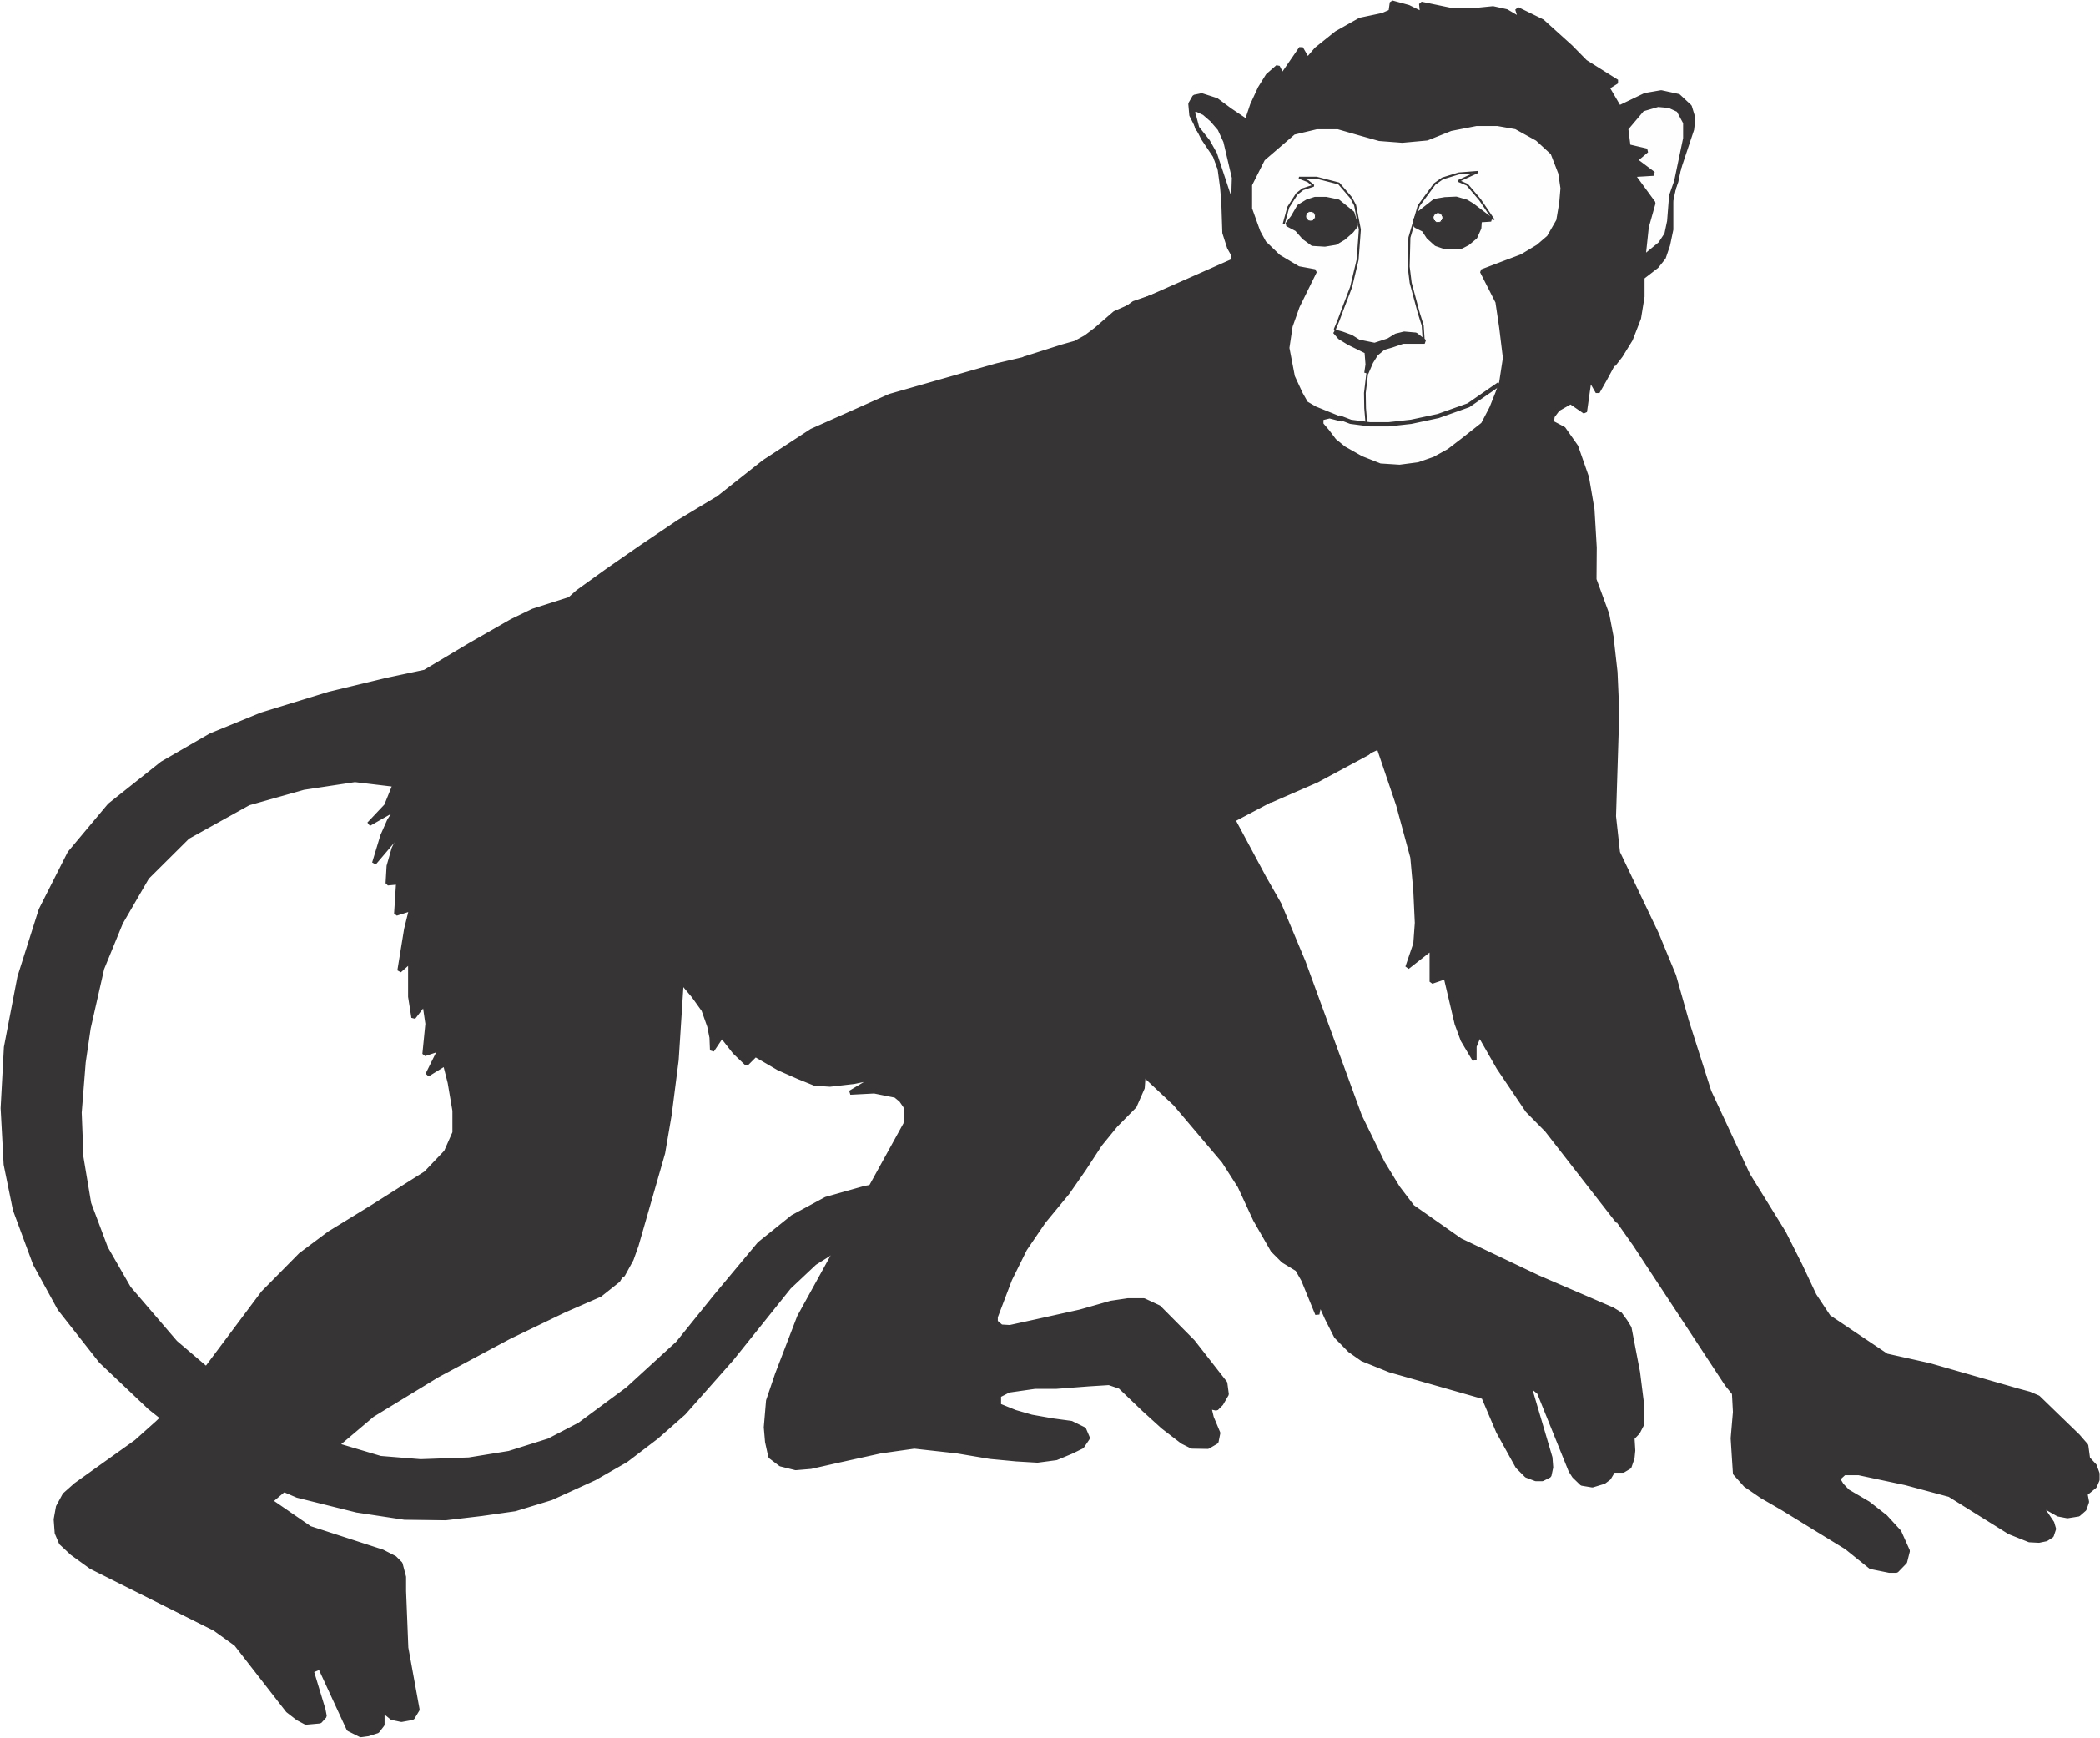 Monkey Silhouette   Clipart Best